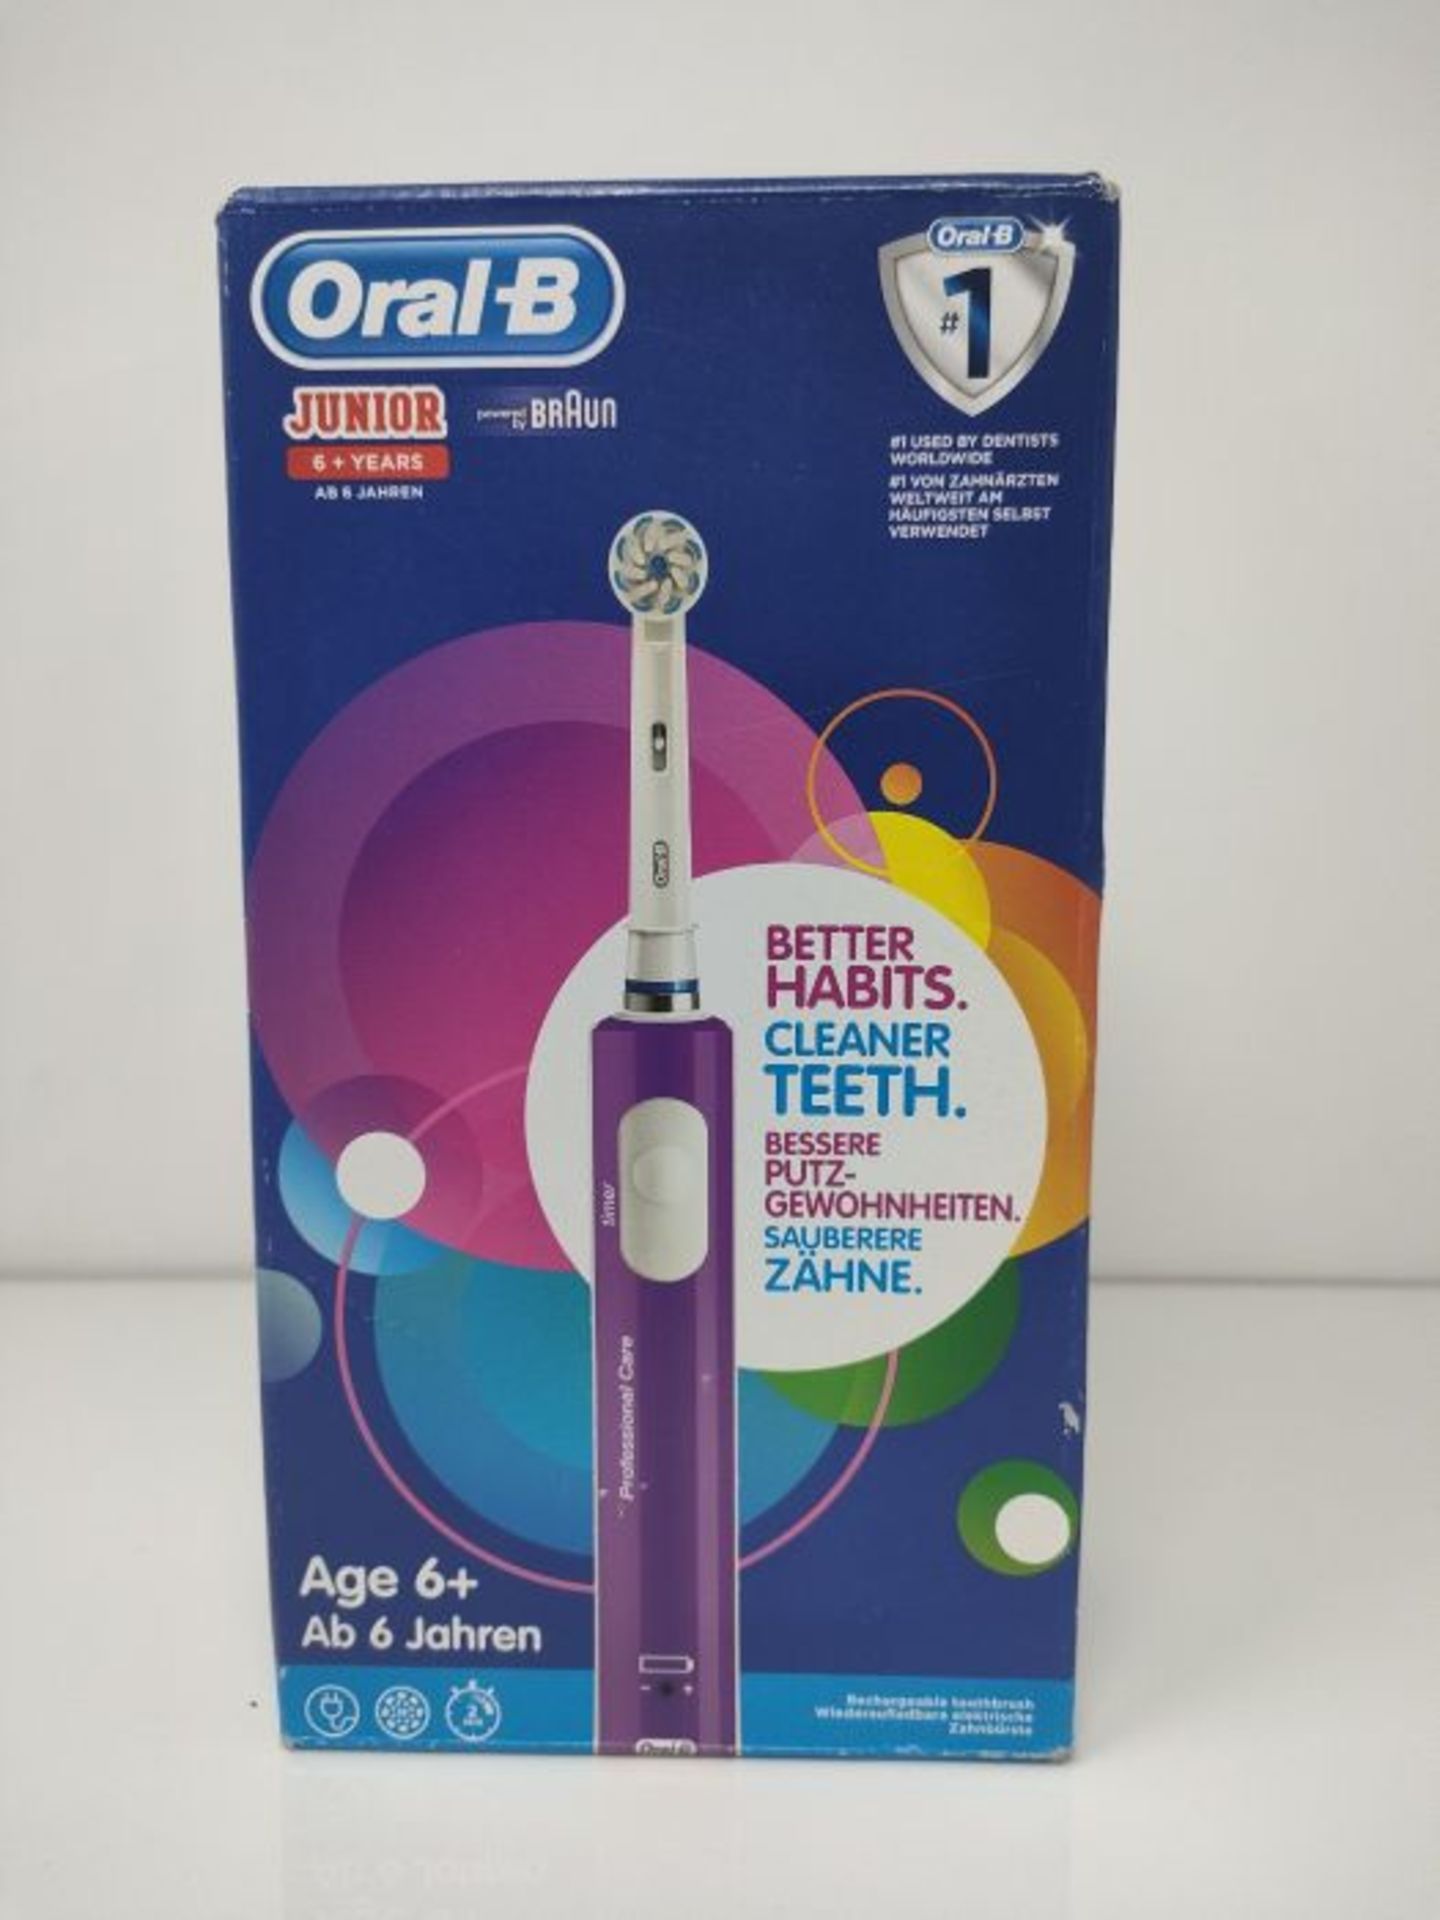 Braun Oral-B Junior Violett - Image 2 of 3